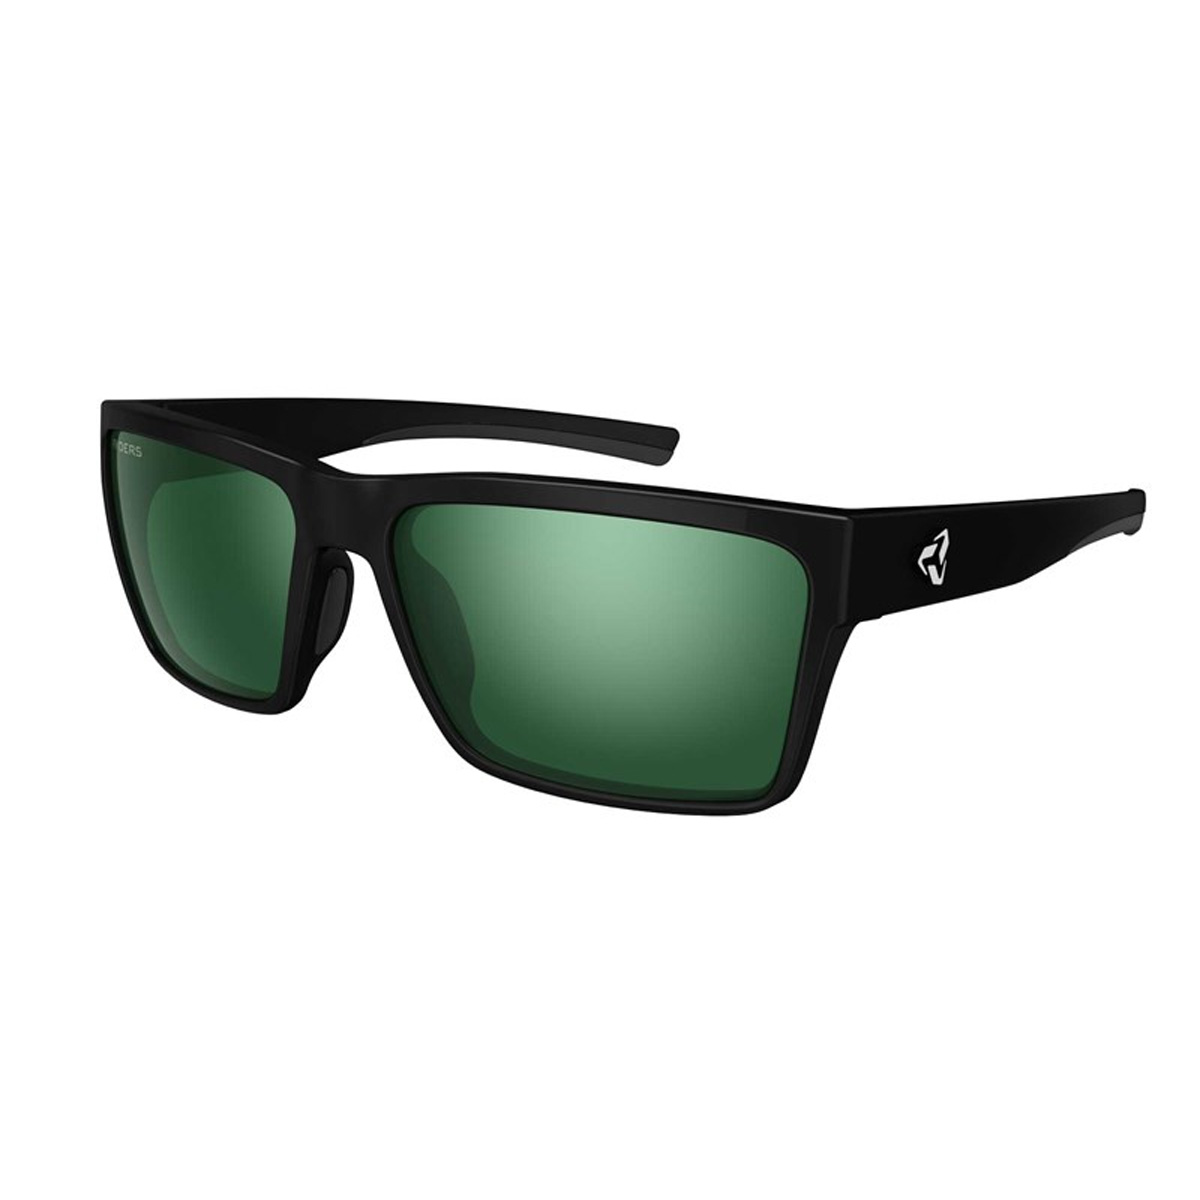 Ryders Eyewear Nelson Standard Sunglasses - Matte (BLACK MATTE / GREEN LENS SILVER FM) - image 1 of 2